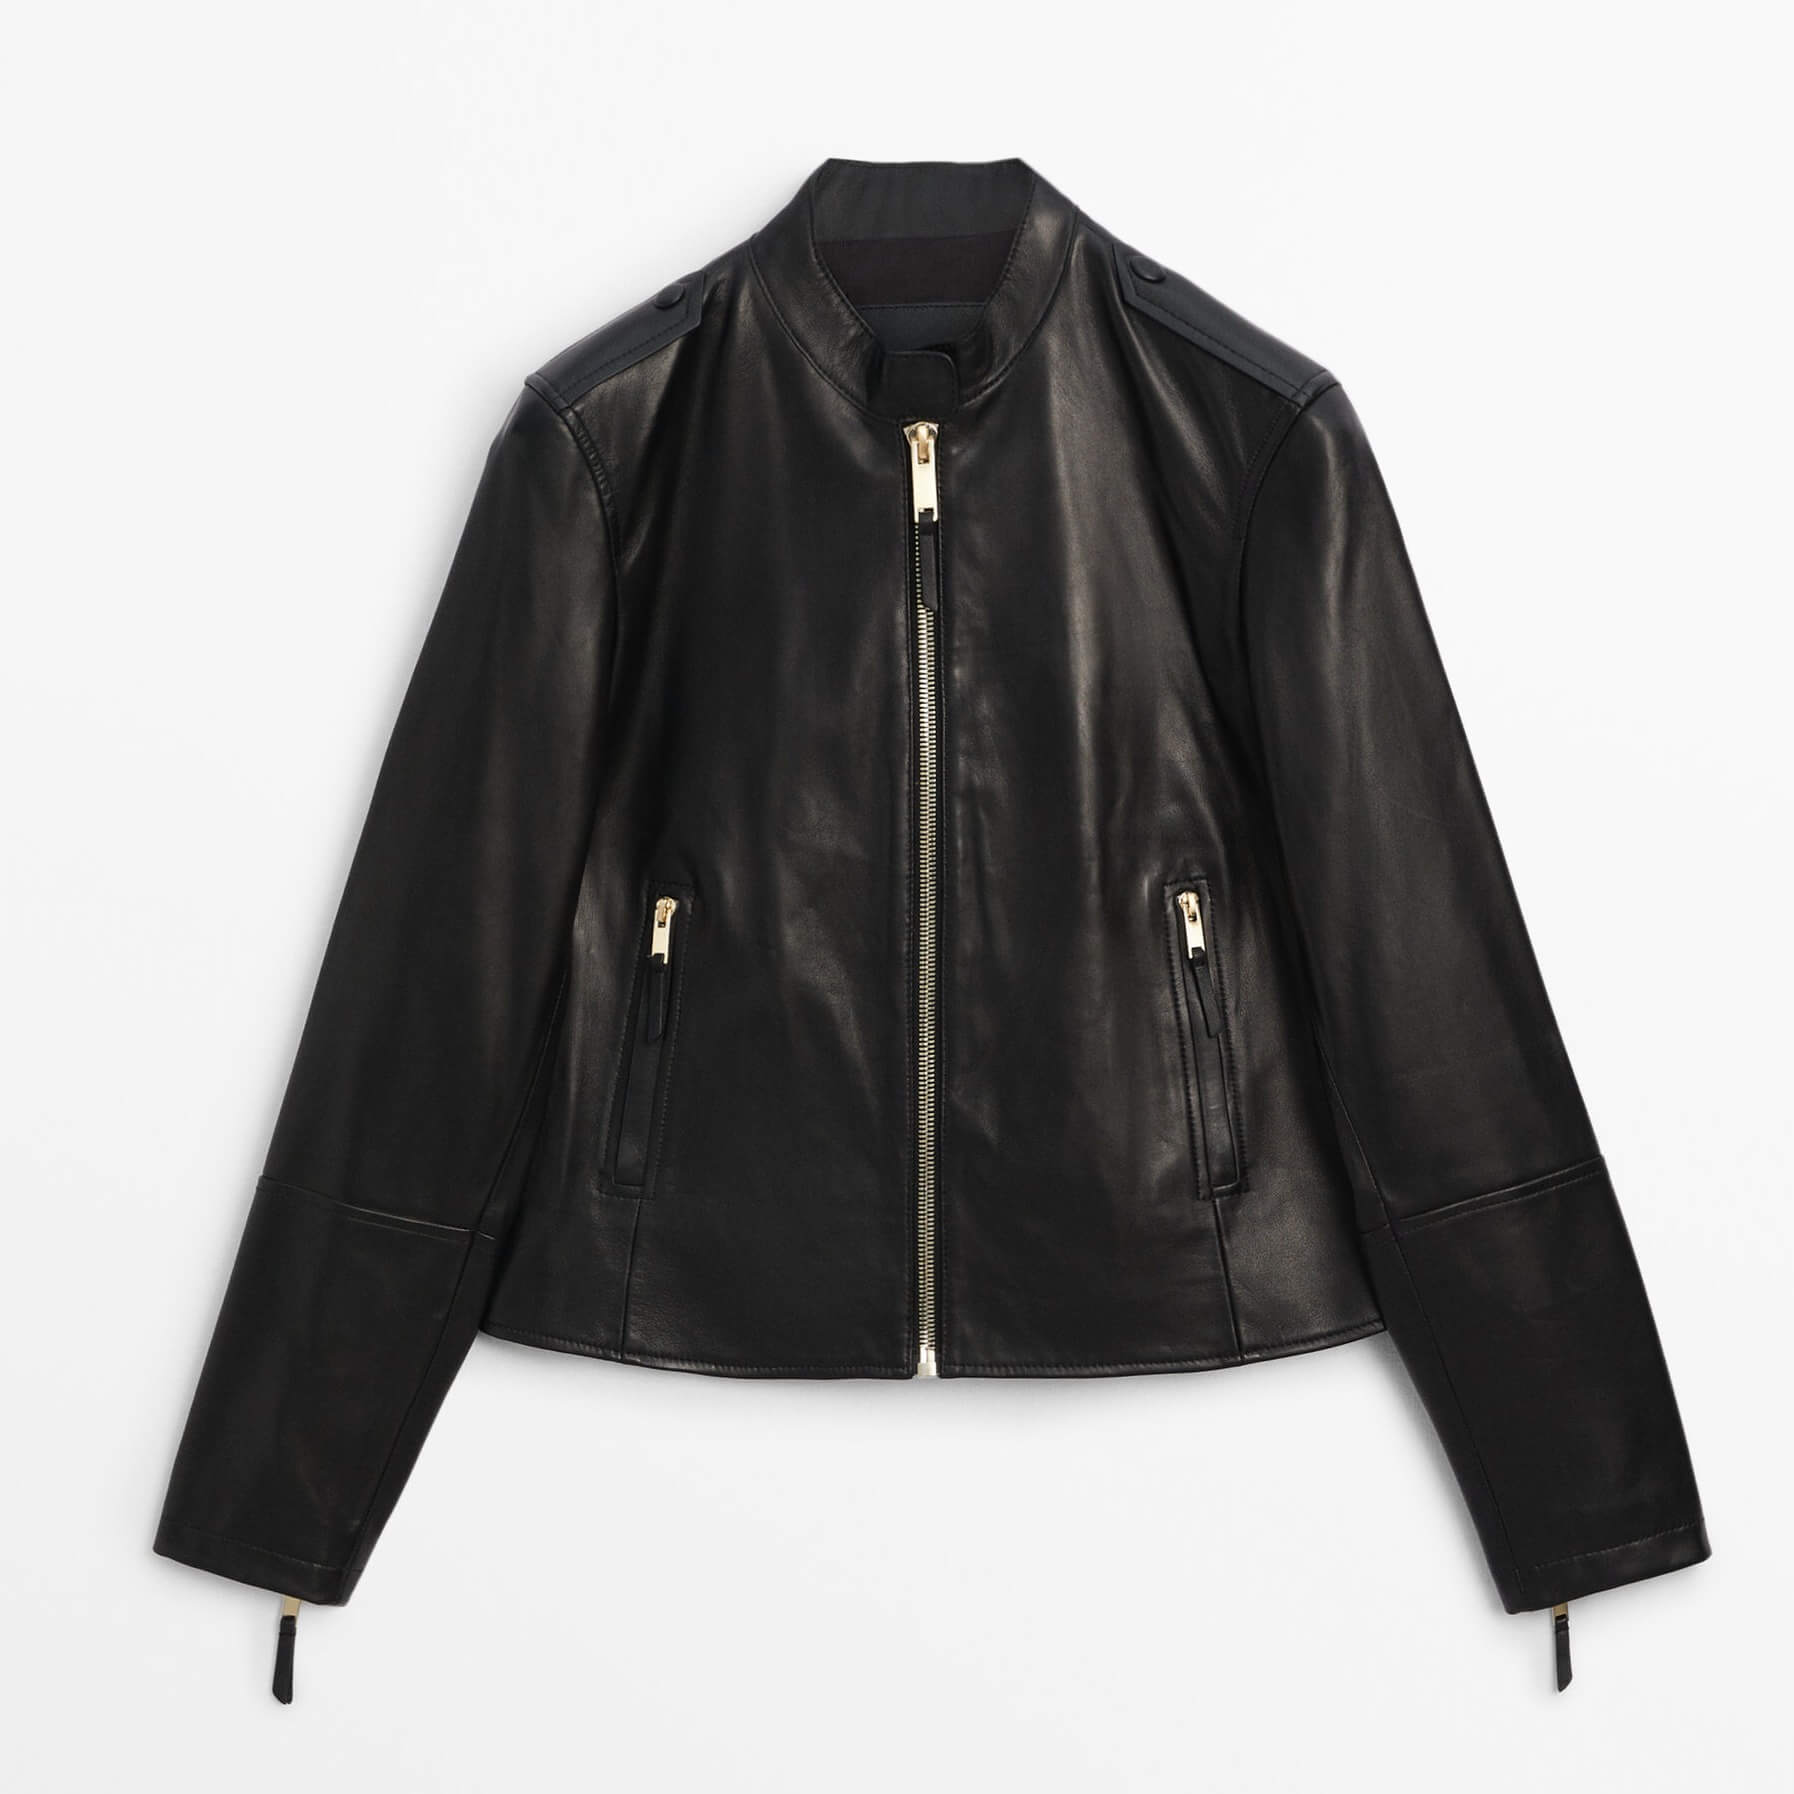 Куртка Massimo Dutti Nappa Leather, черный куртка рубашка massimo dutti nappa leather with pocket коричневый